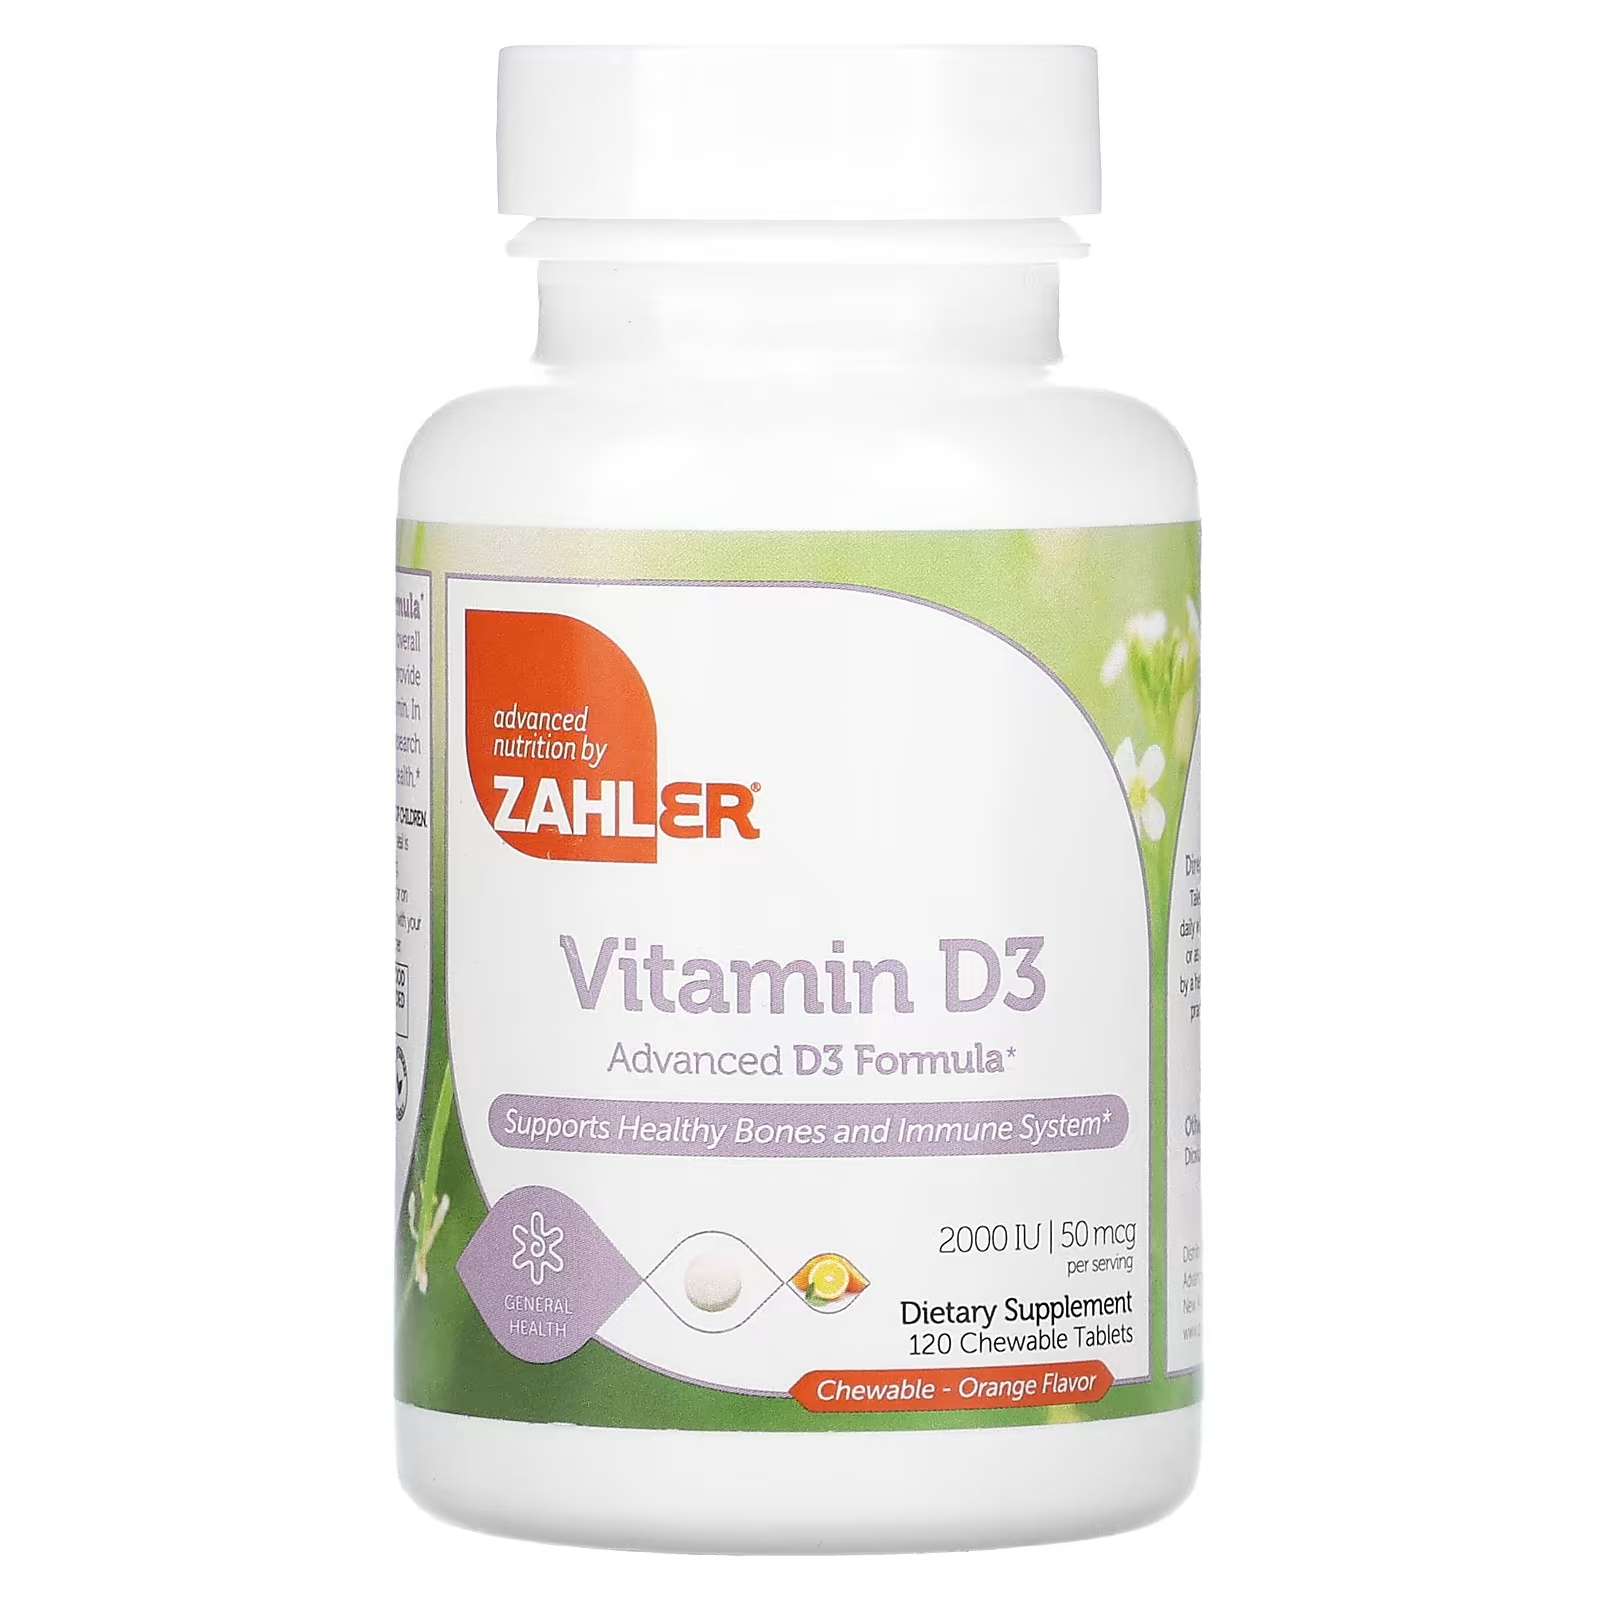 Витамин D3 Zahler апельсин 50 мкг 2000 МЕ, 120 таблеток витамин d3 zahler усовершенствованная формула d3 50 мкг 2000 ме 120 капсул